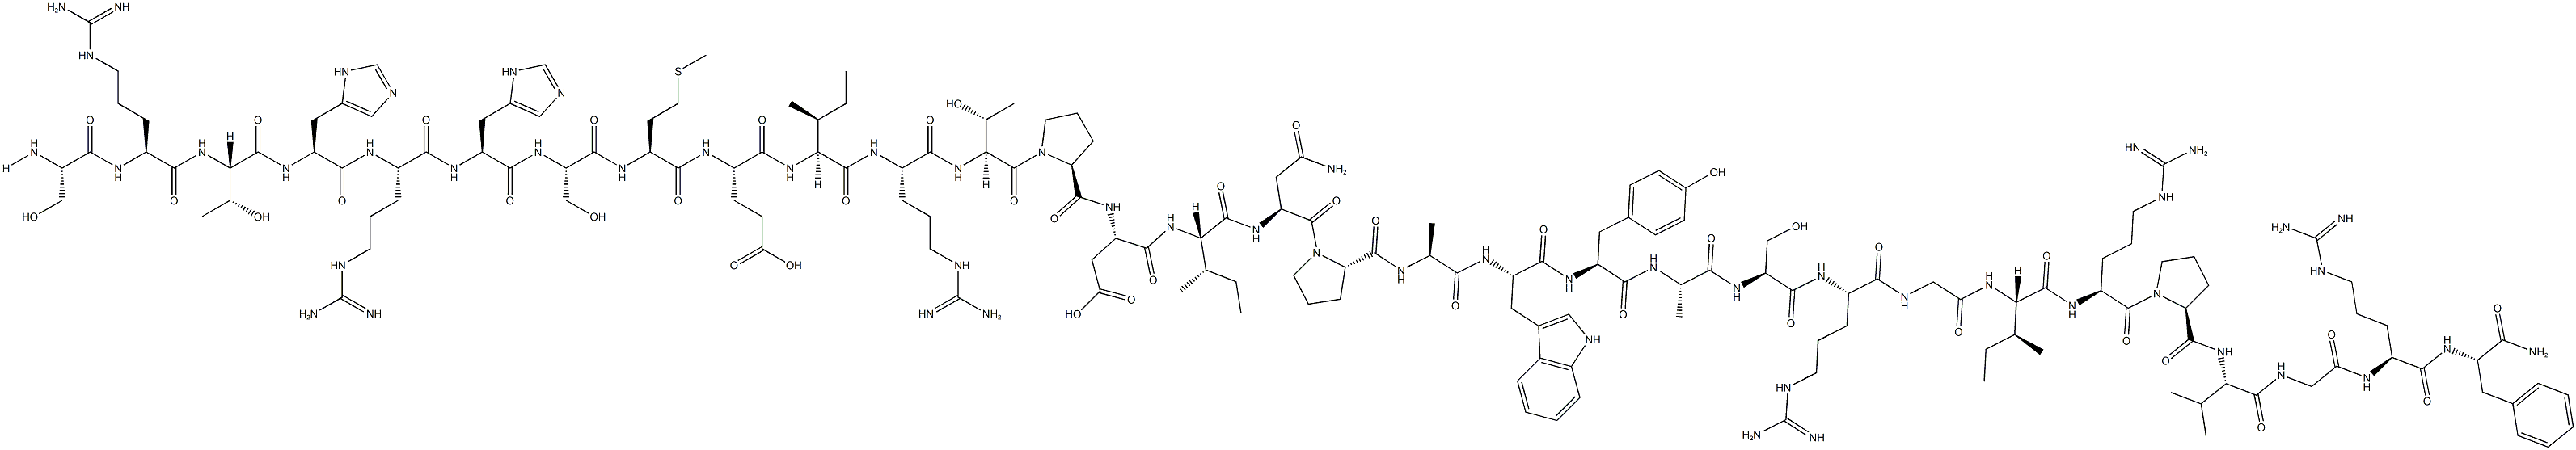 Prolactin-Releasing Peptide (1-31) (human) Struktur